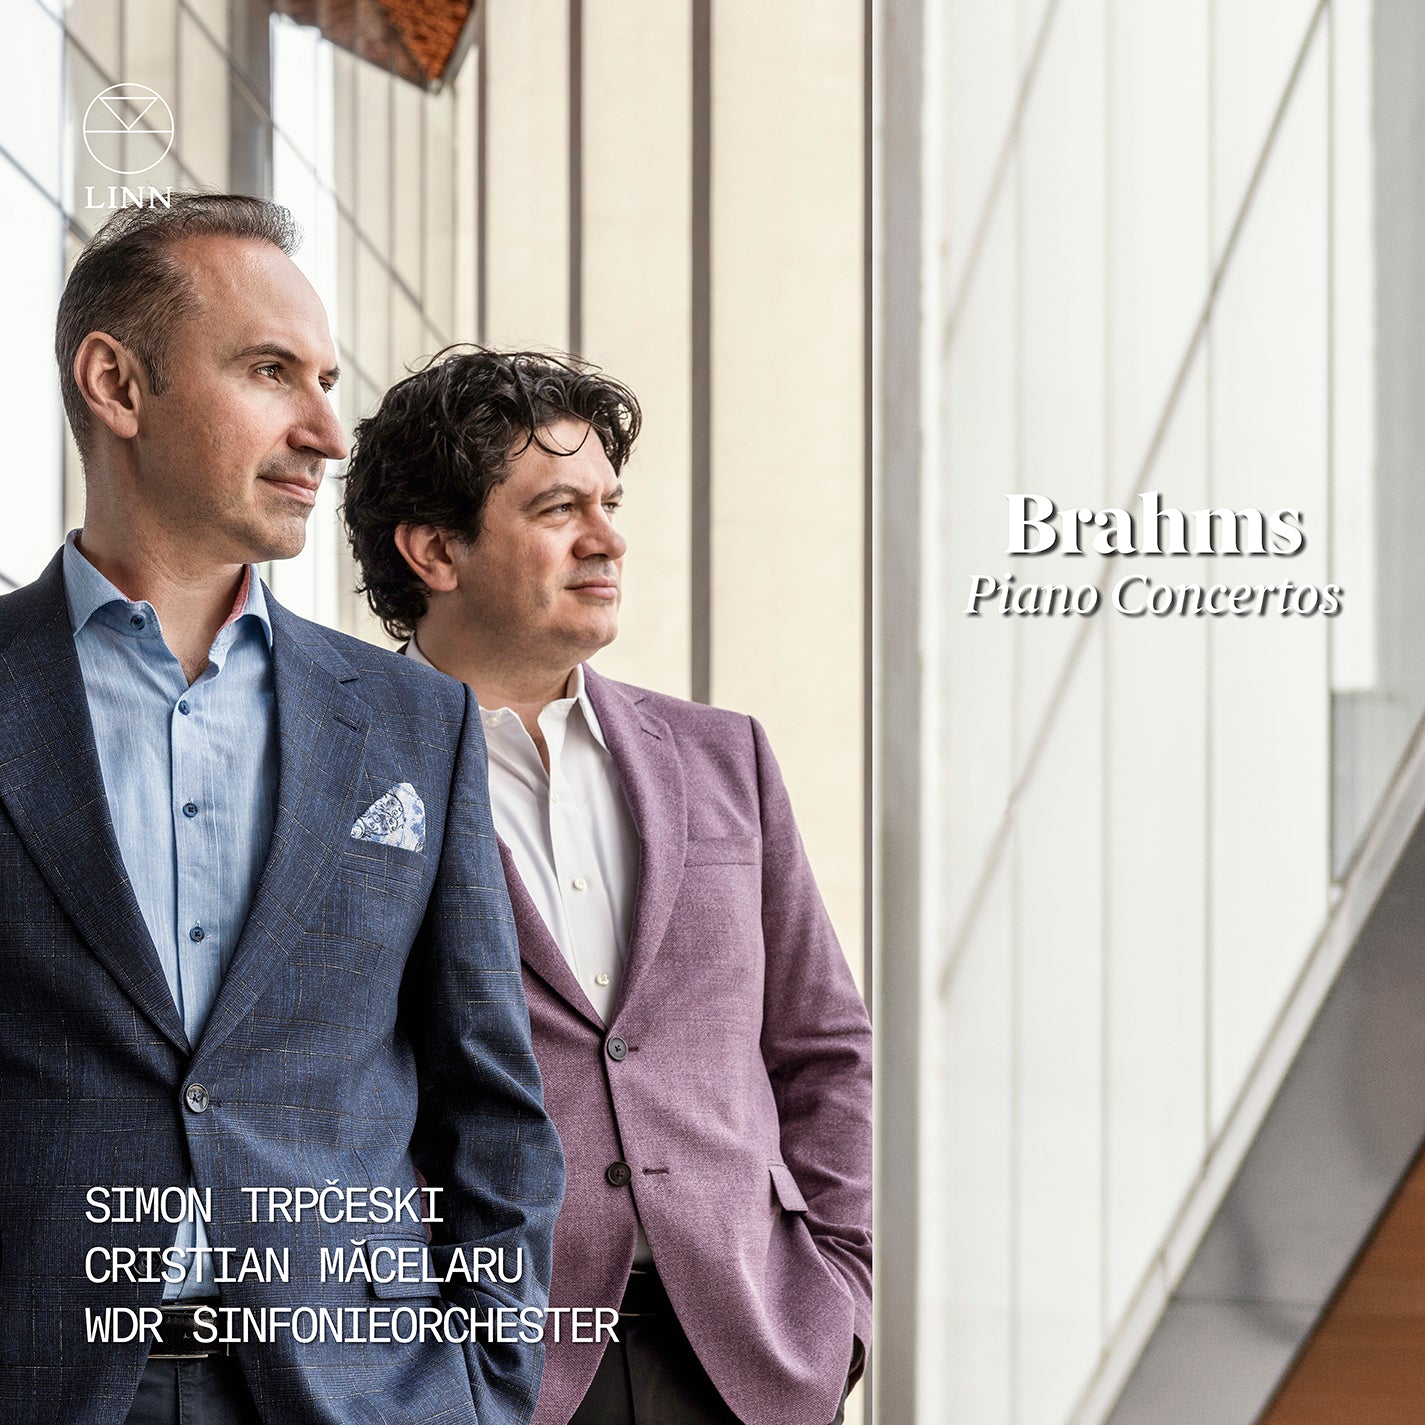 Brahms: Piano Concertos  Simon Trpceski, Cristian Macelaru, Wdr Sinfonieorchester